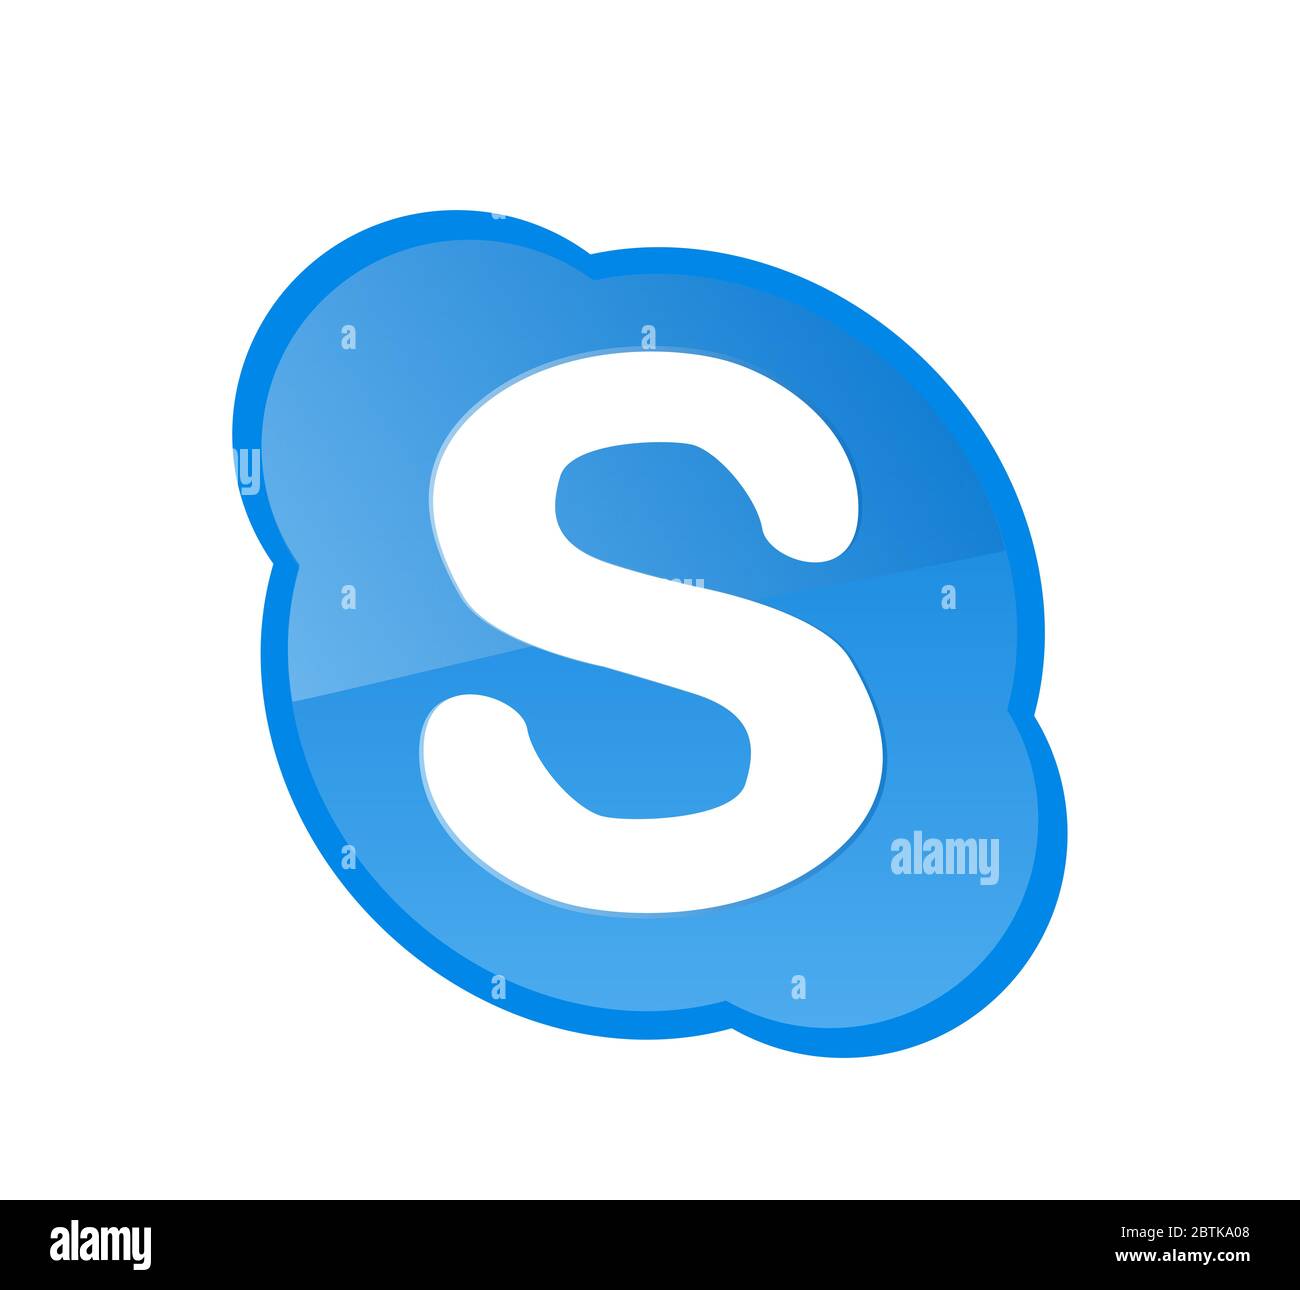 Skype logotype on white background. Skype is a telecommunications application software developed by Microsoft. Kharkiv, Ukraine - May 26, 2020 Stock Photo